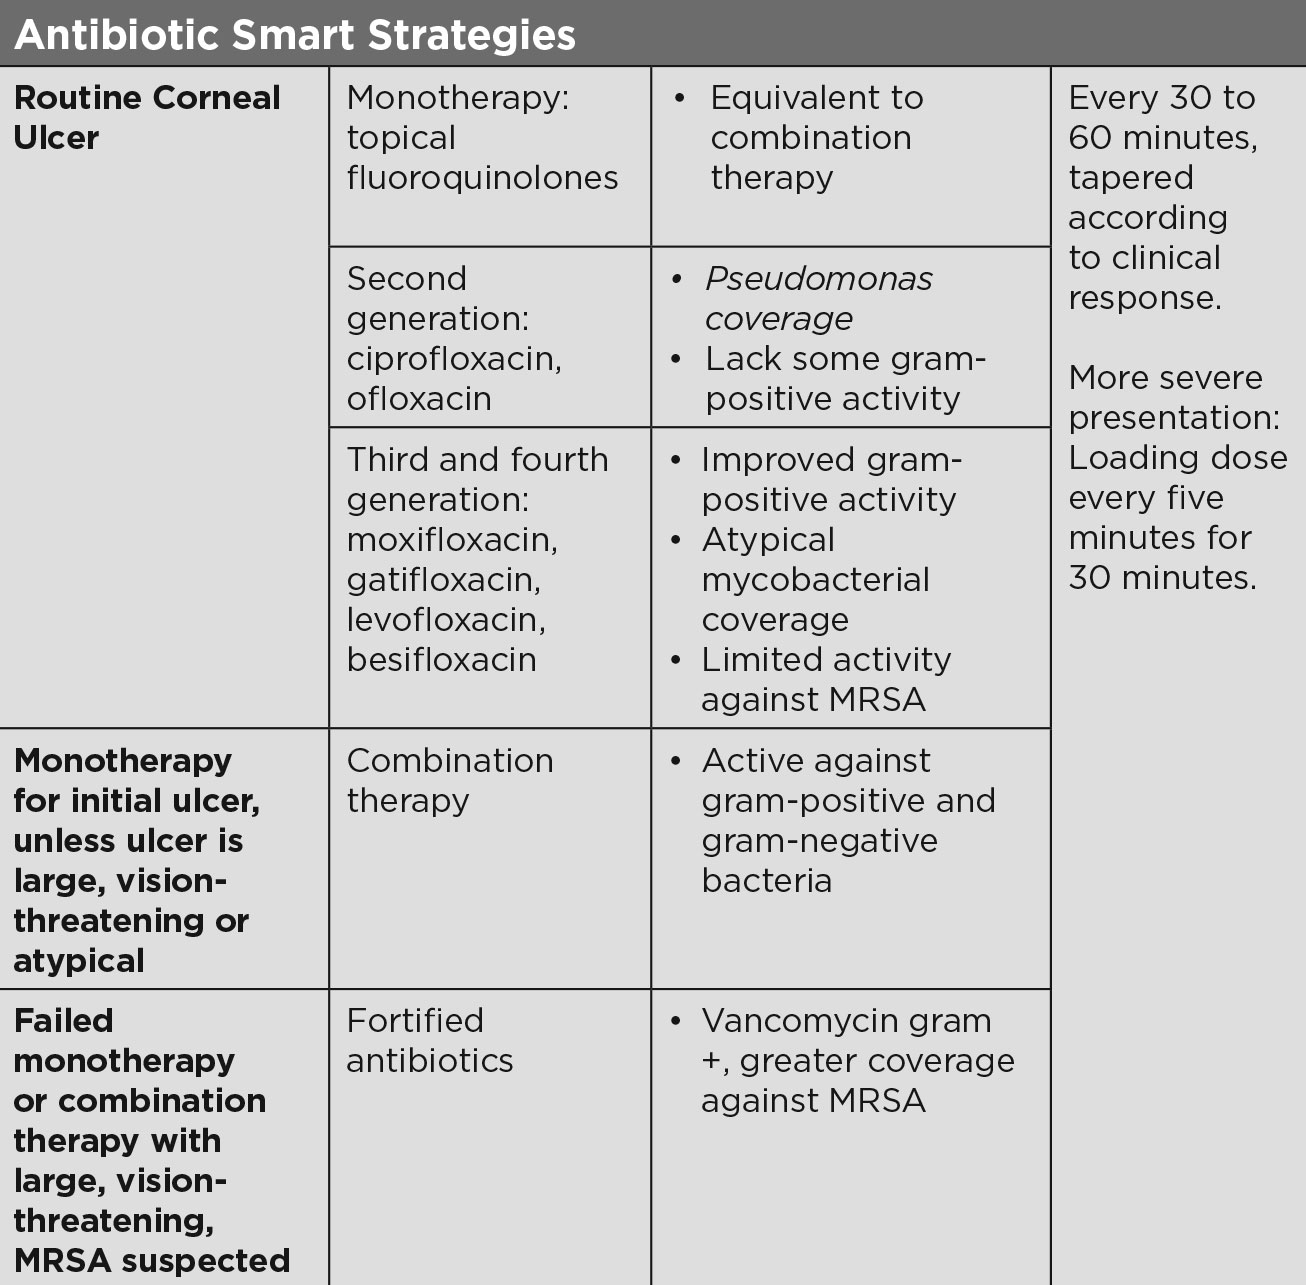 Antibiotic Smart Strategies